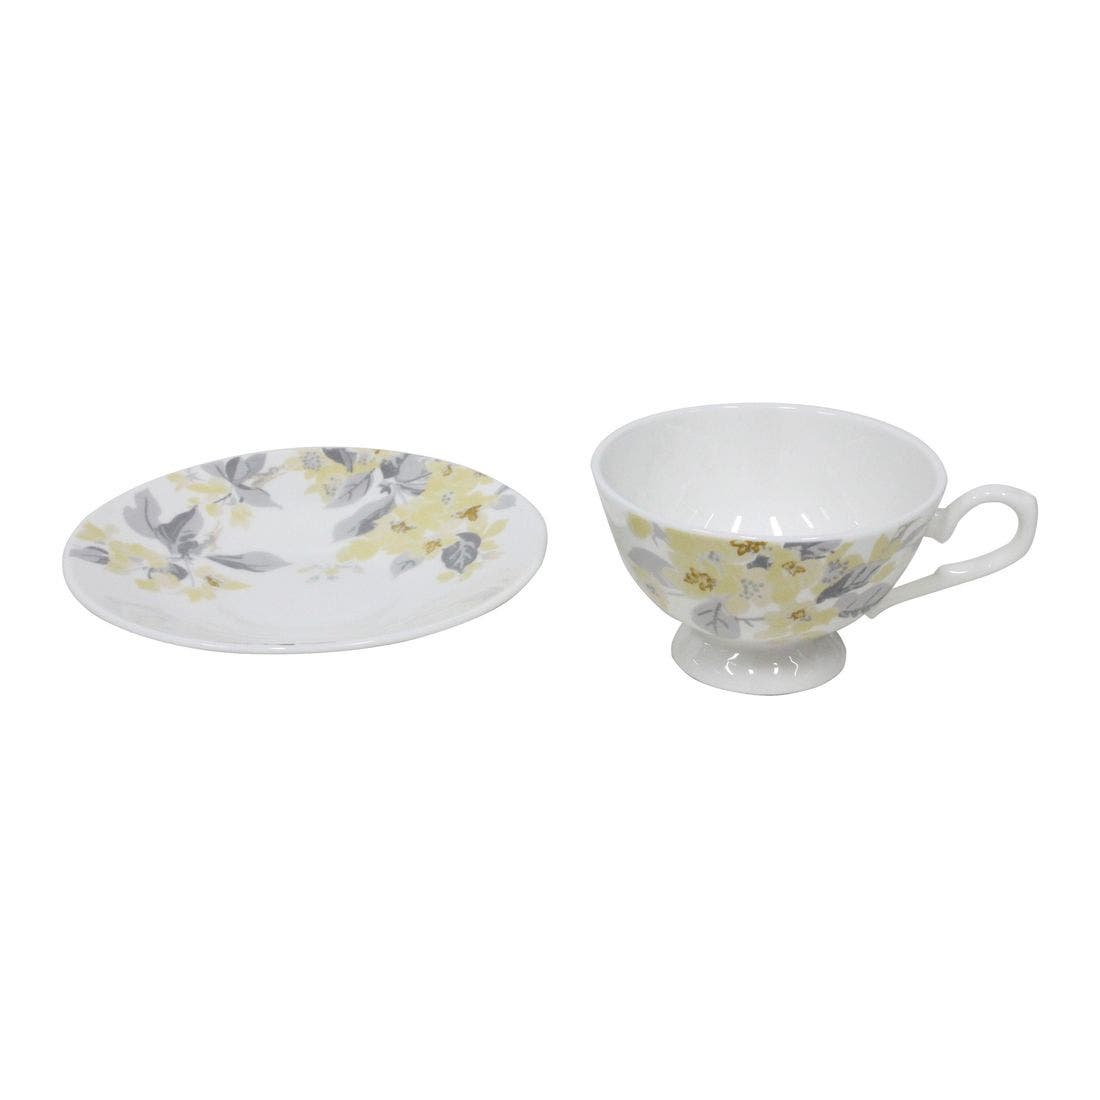 25032017-vintage-home-decor-tableware-kitchenware-cup-mug-teapot-01